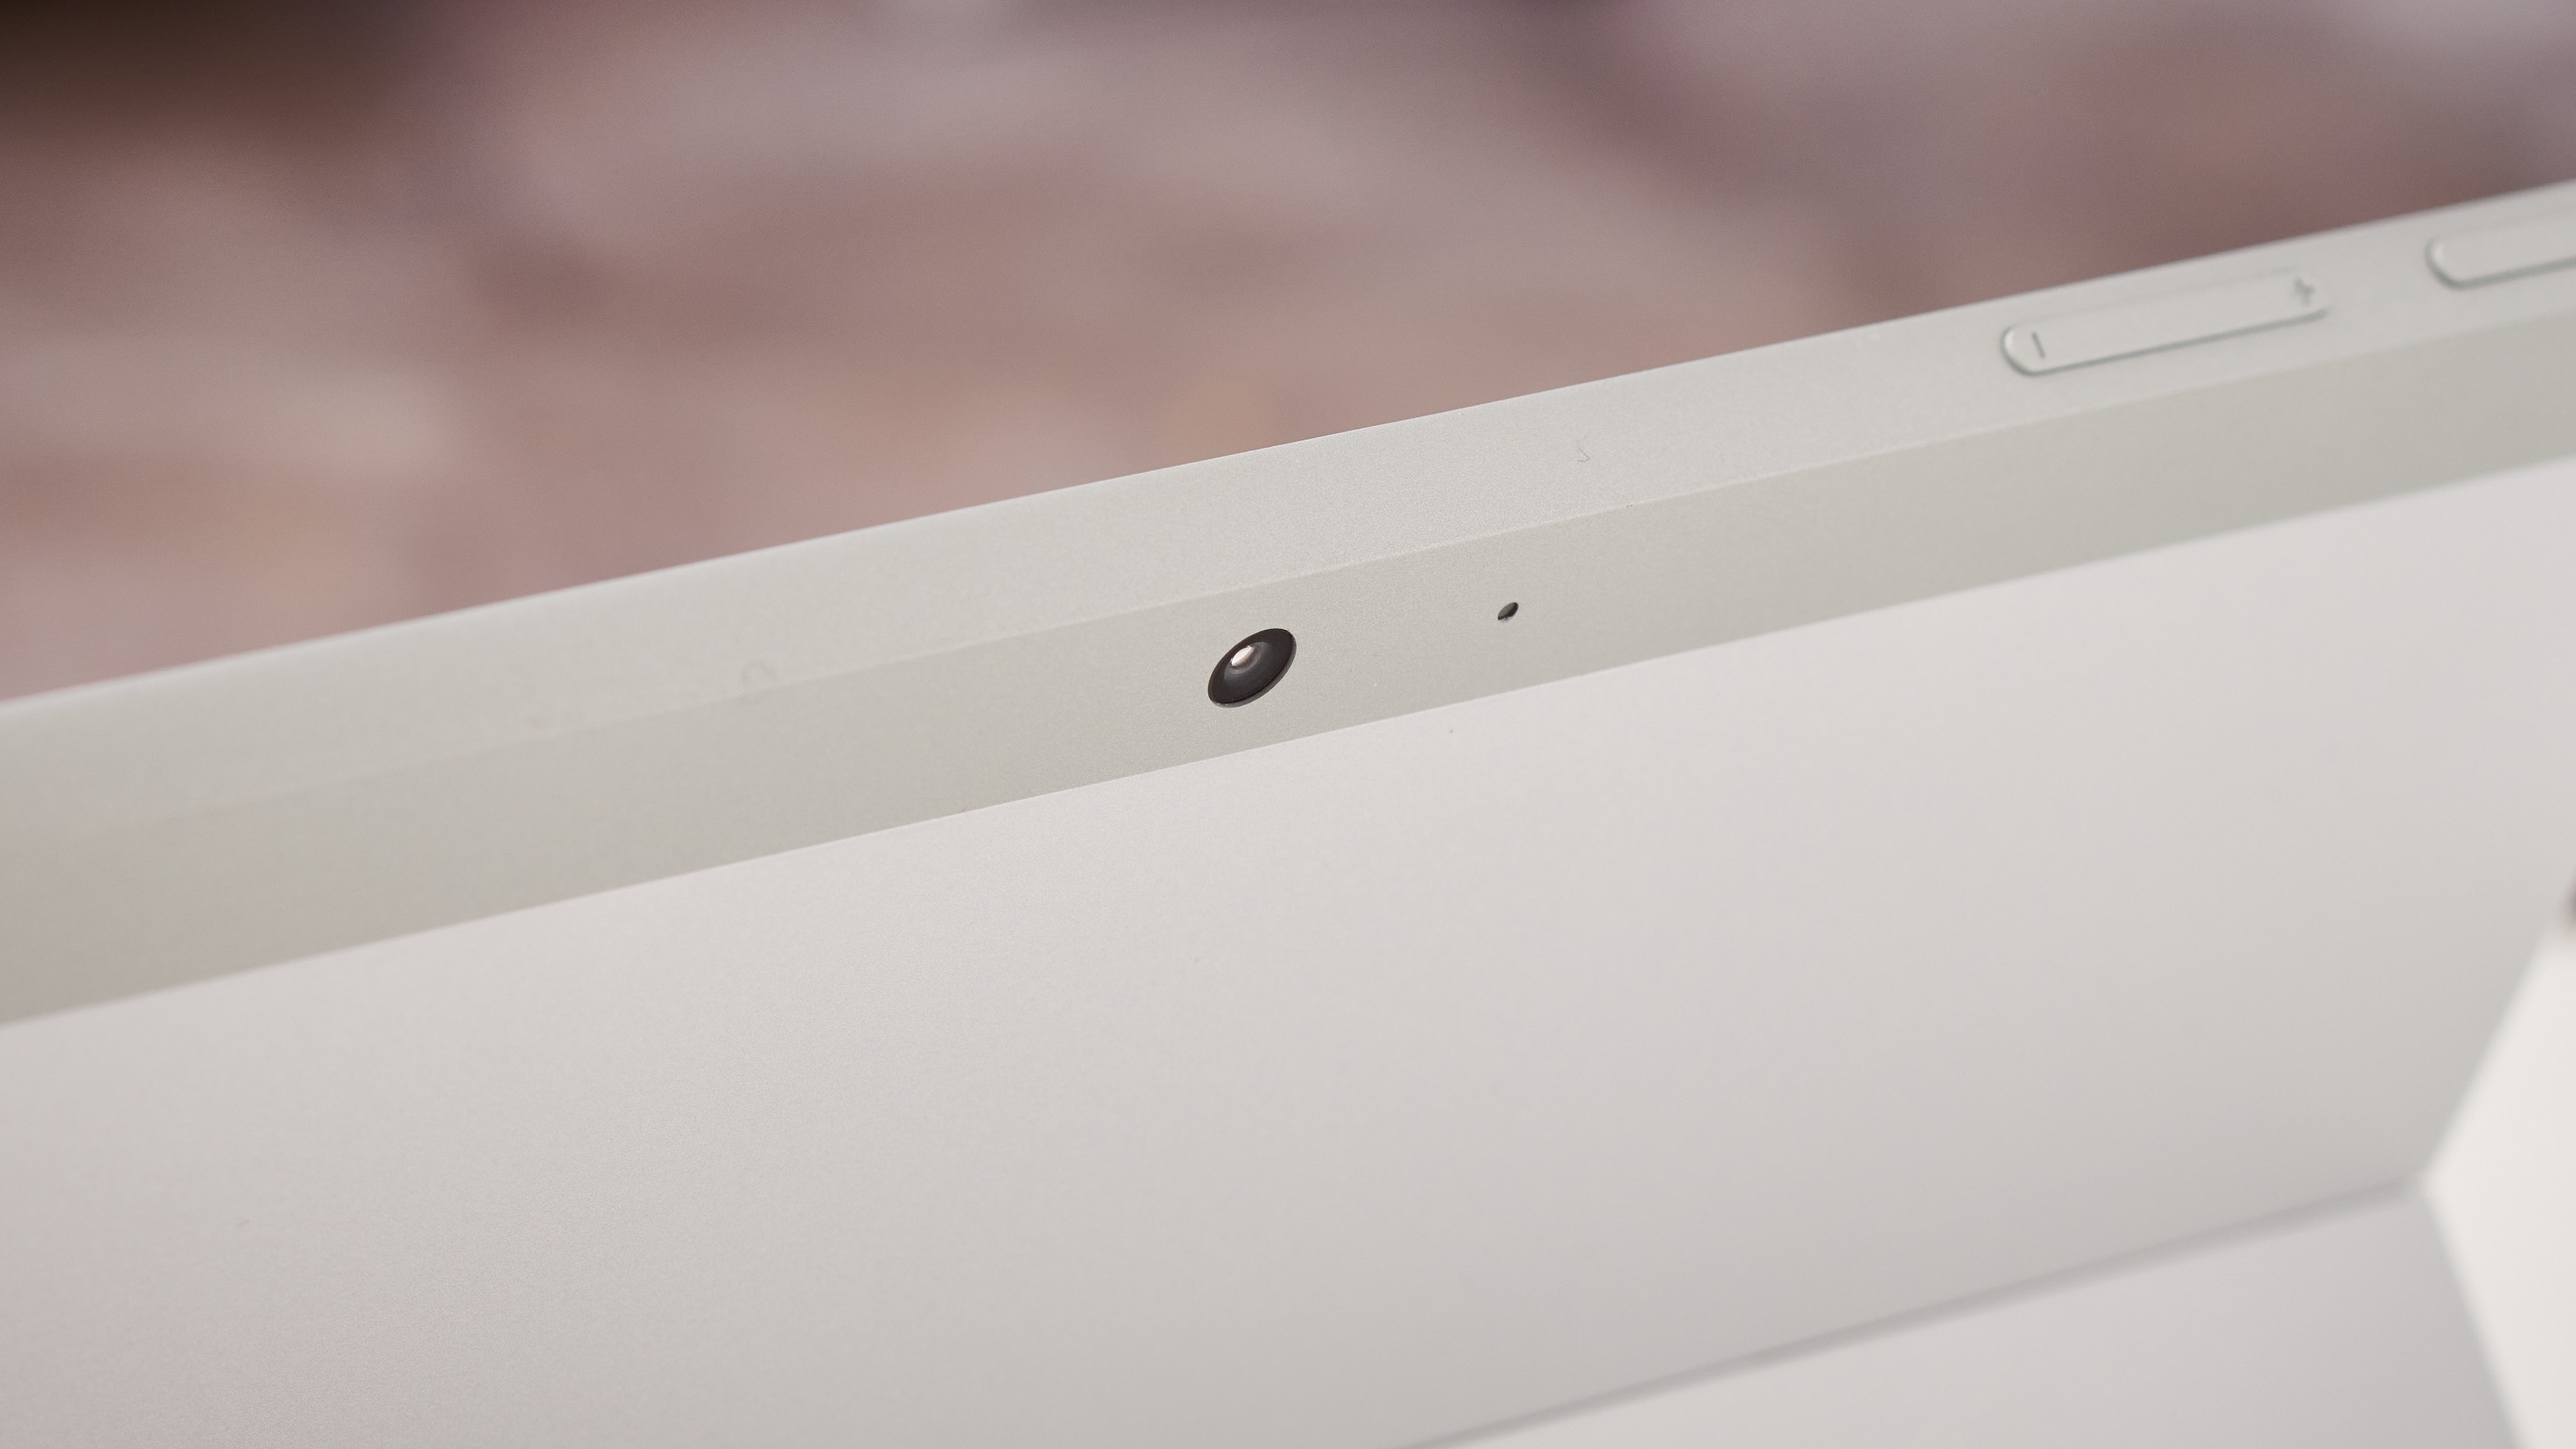 Microsoft Surface Go 2's back camera